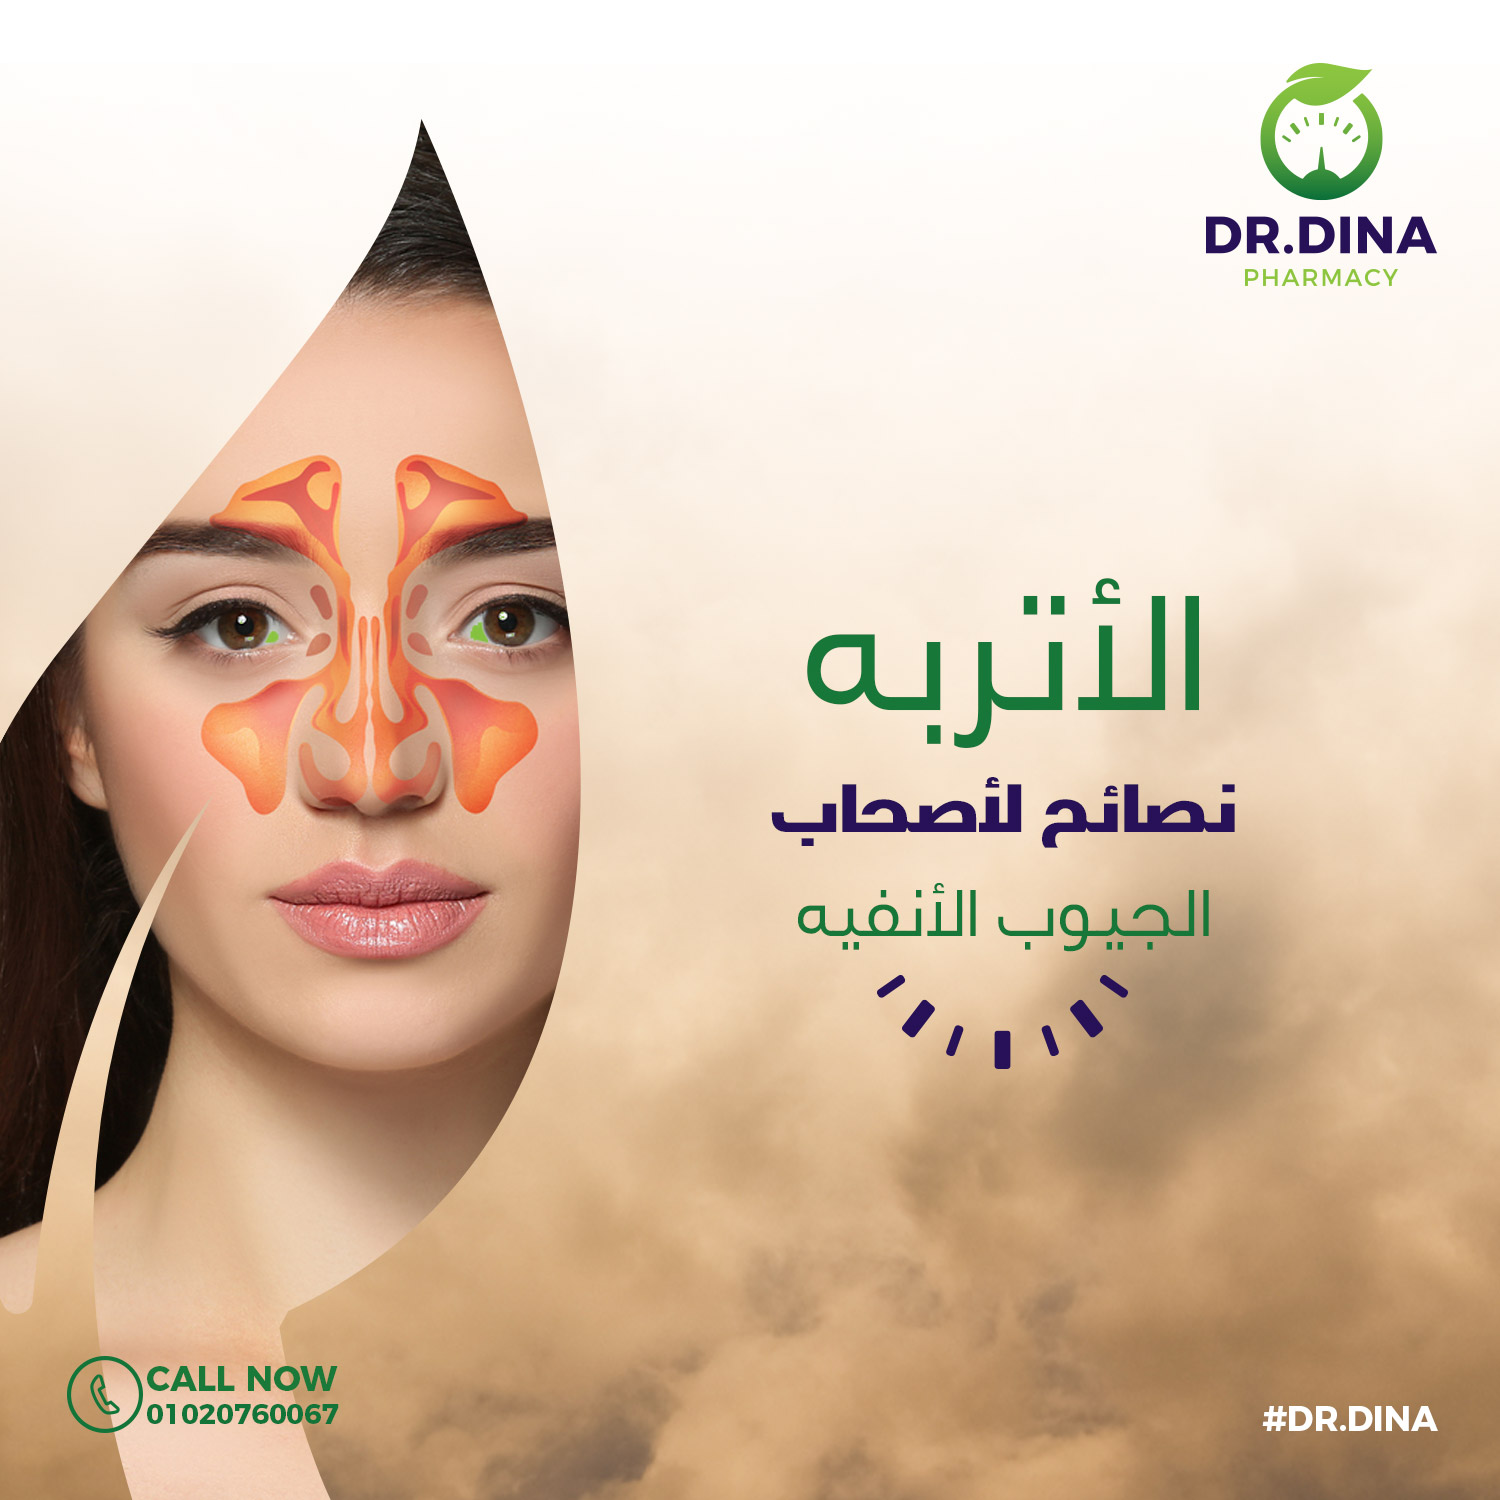 Dr Dina Pharmacy Social Media Campaign SkinCare social media content 